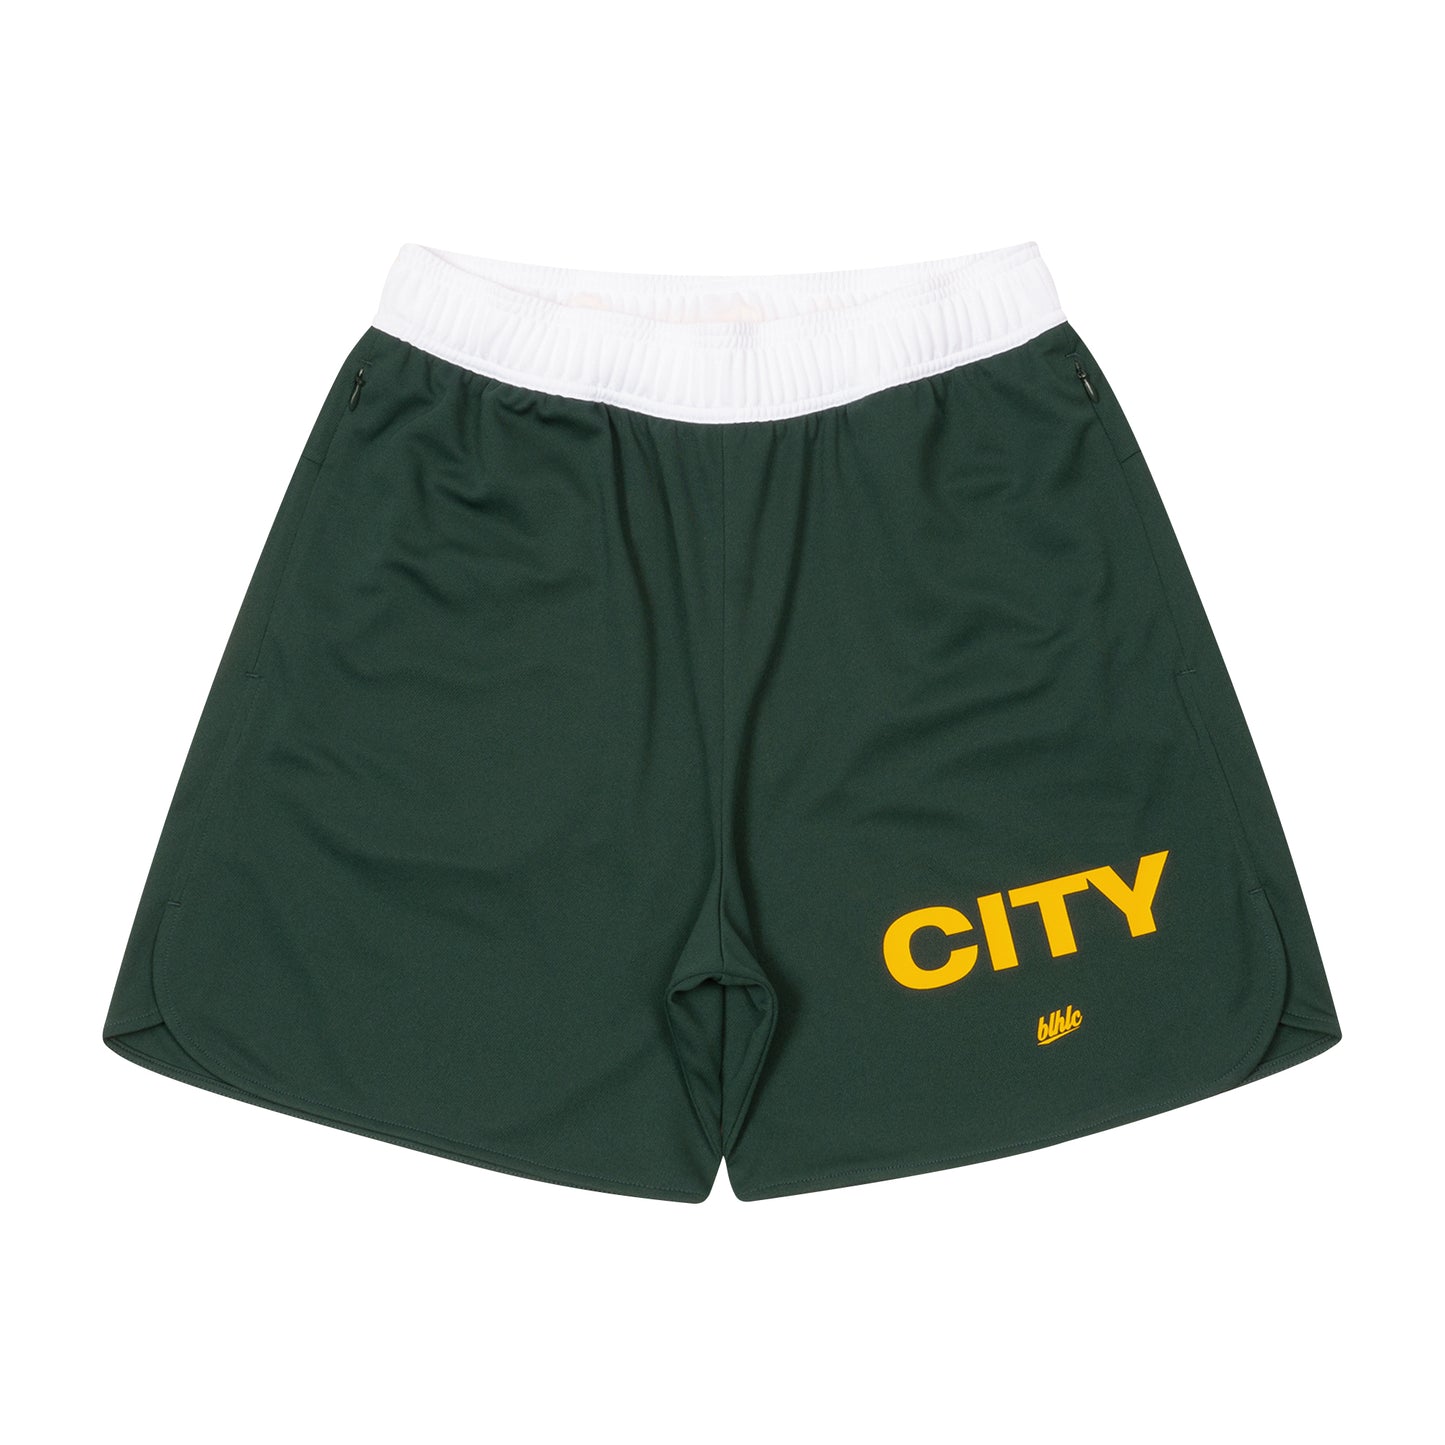 MY CITY Zip Shorts (dark green)